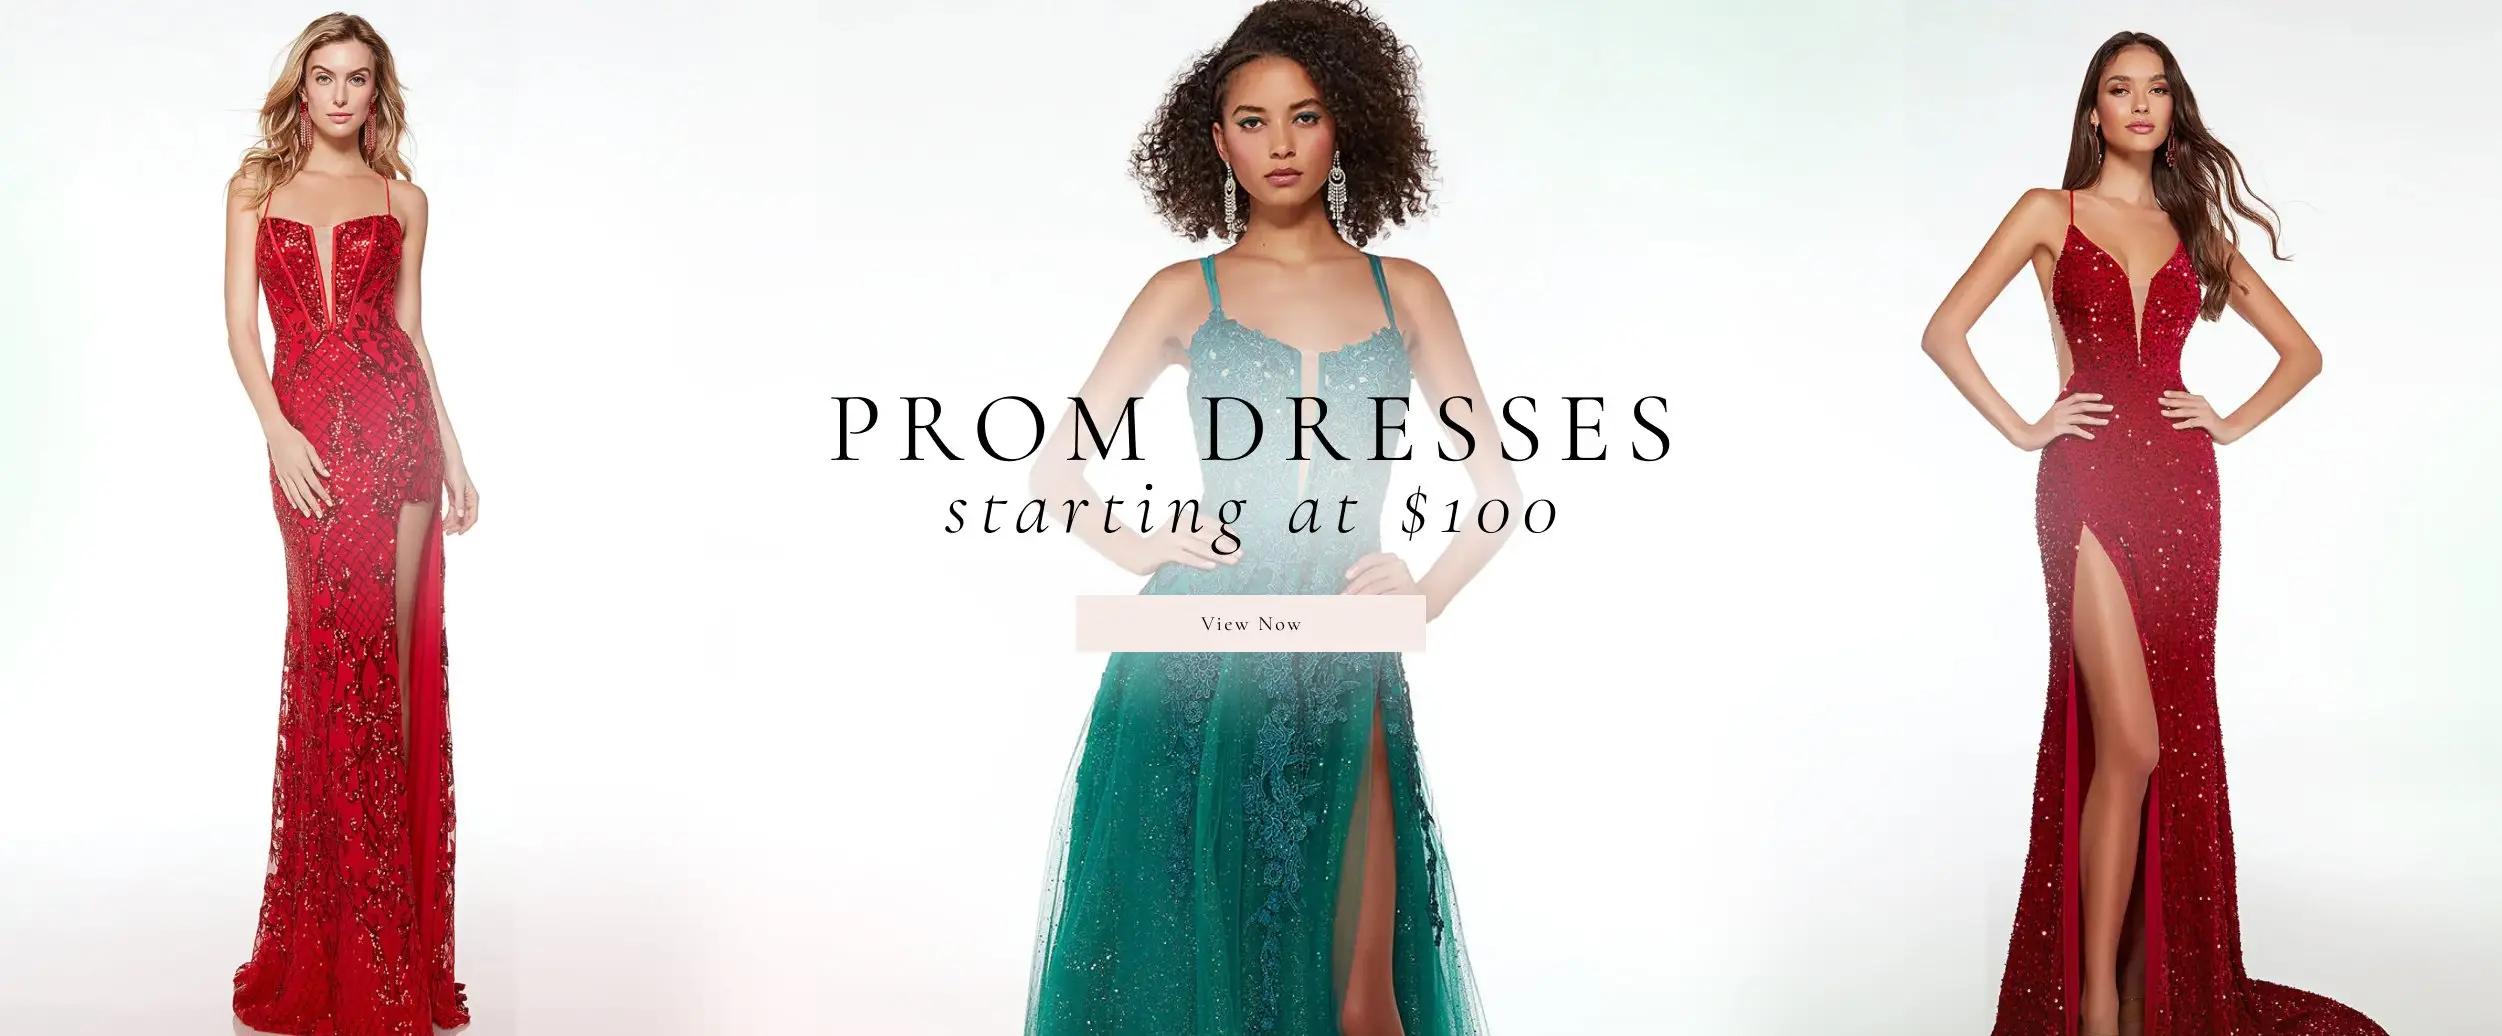 Prom Dresses banner desktop